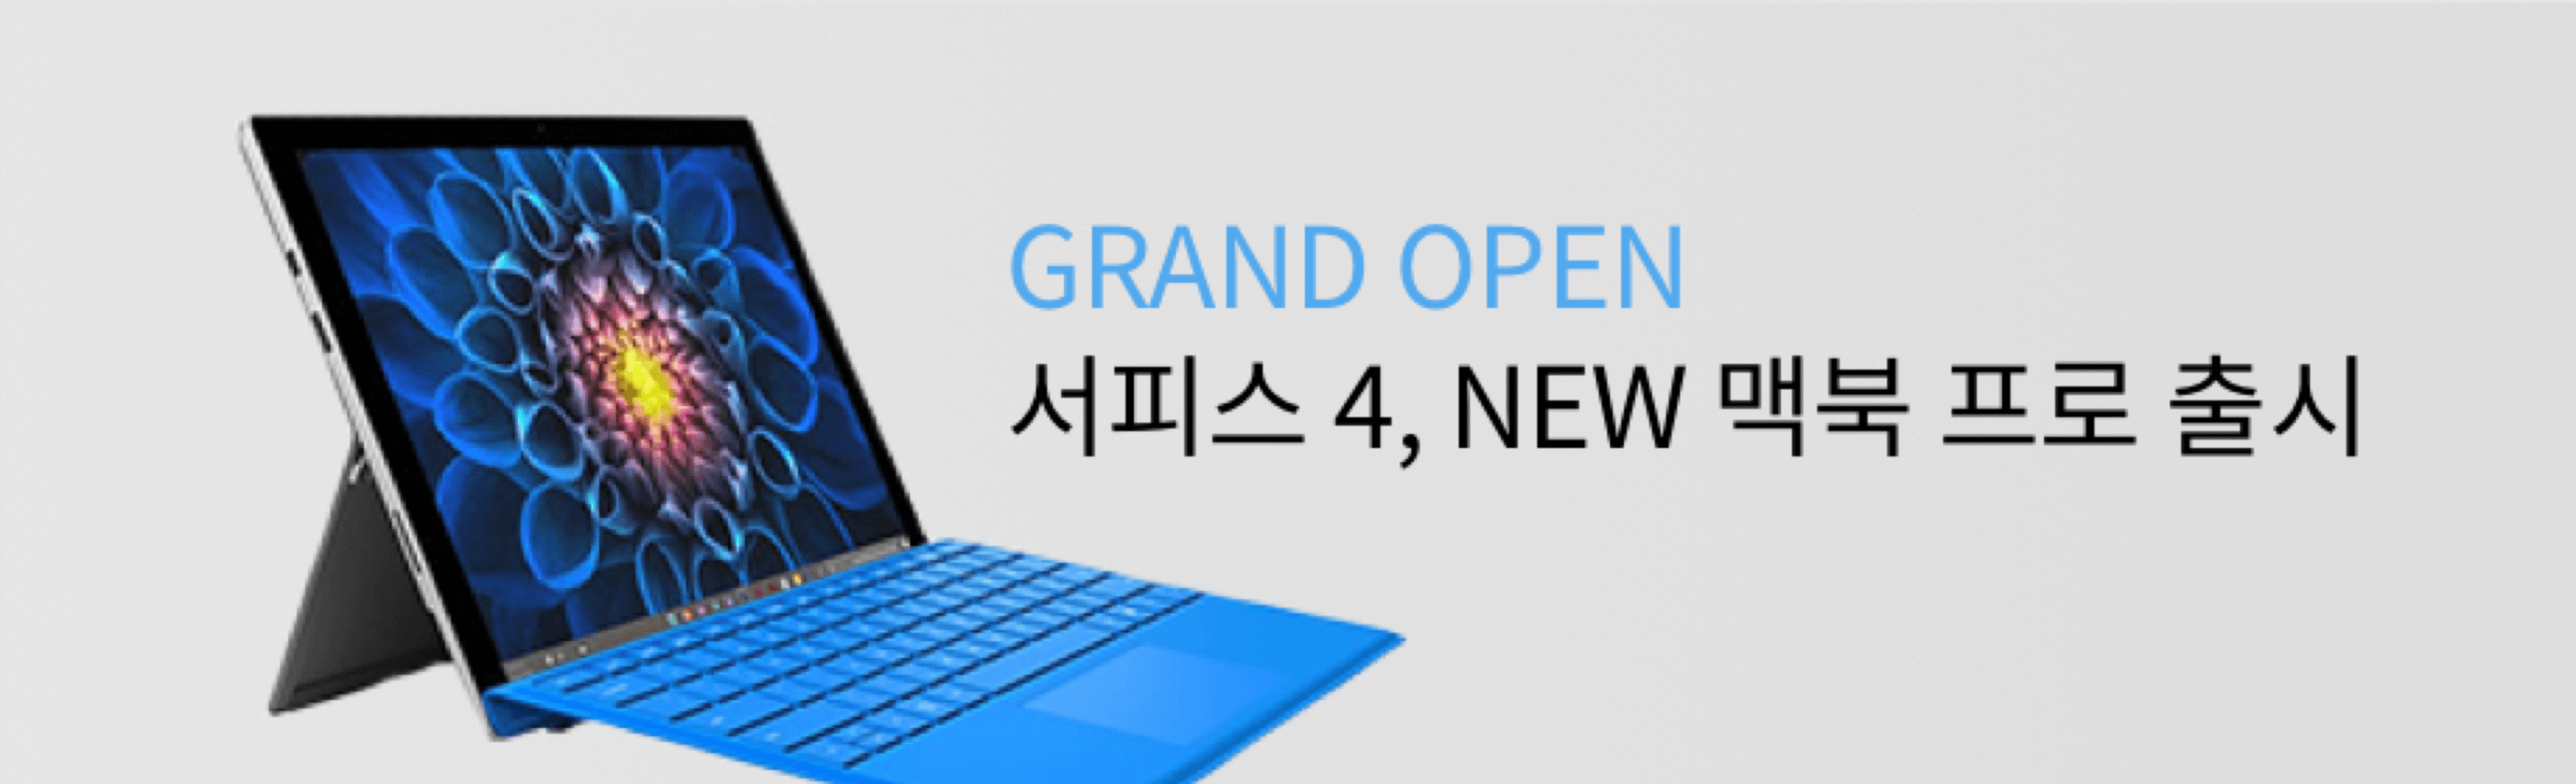 GRAND OPEN 서피스 4 & NEW 맥북 프로 출시